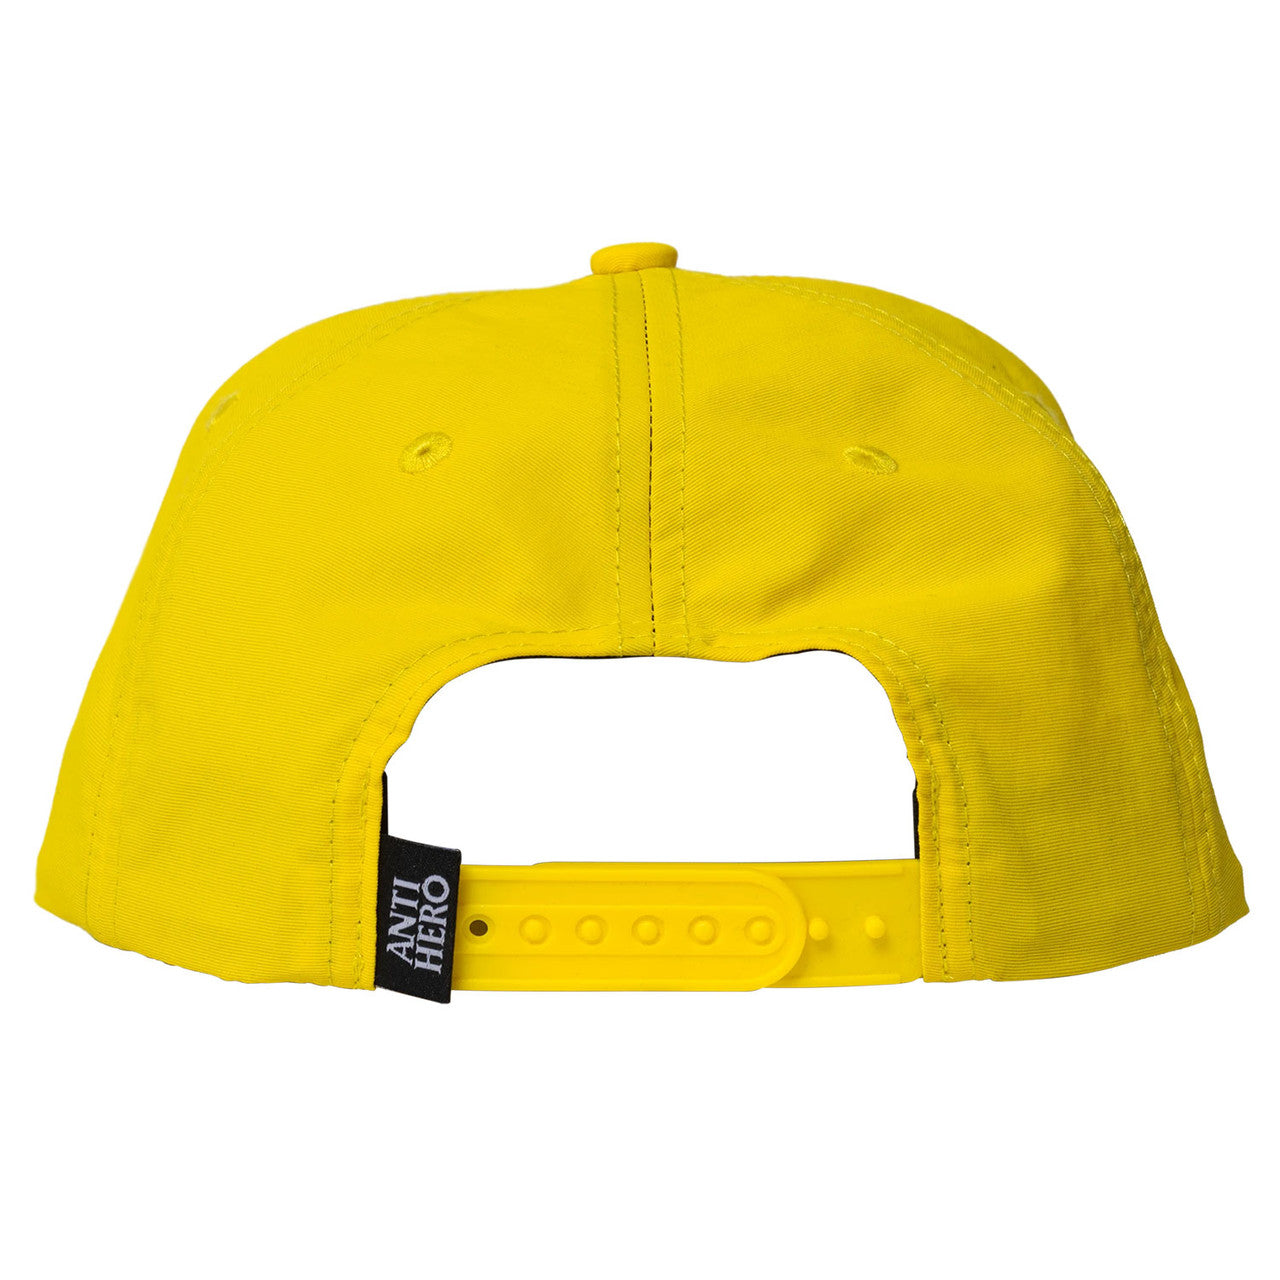 Anti Hero Basic Eagle Snapback Hat - Mustard/Black